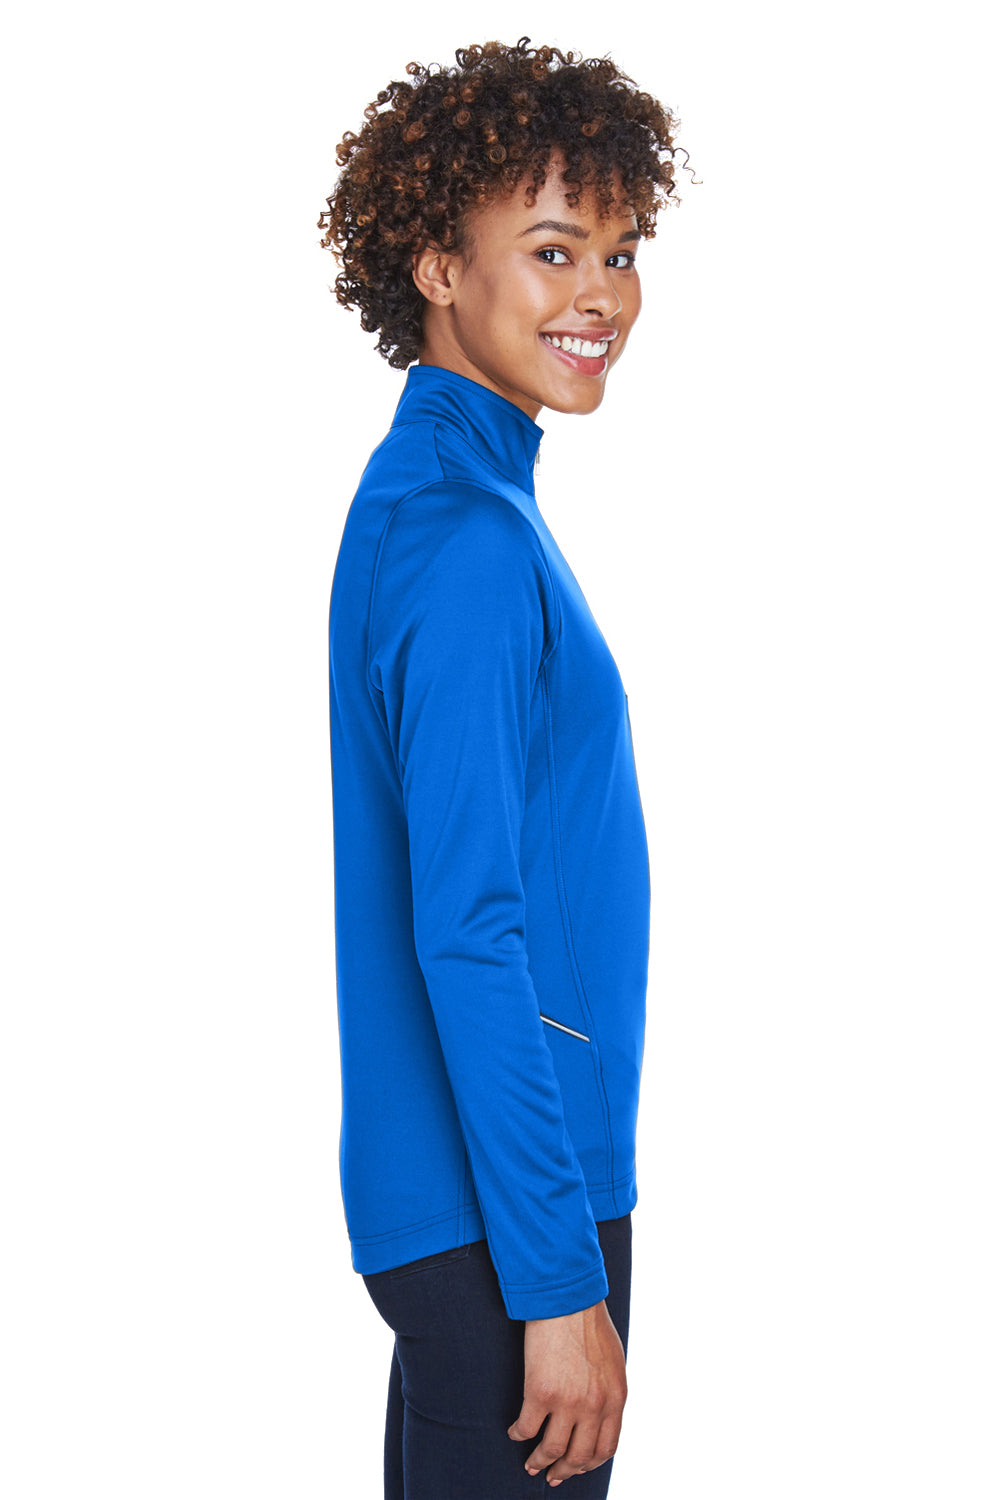 UltraClub 8230L Womens Cool & Dry Moisture Wicking 1/4 Zip Sweatshirt Royal Blue Side